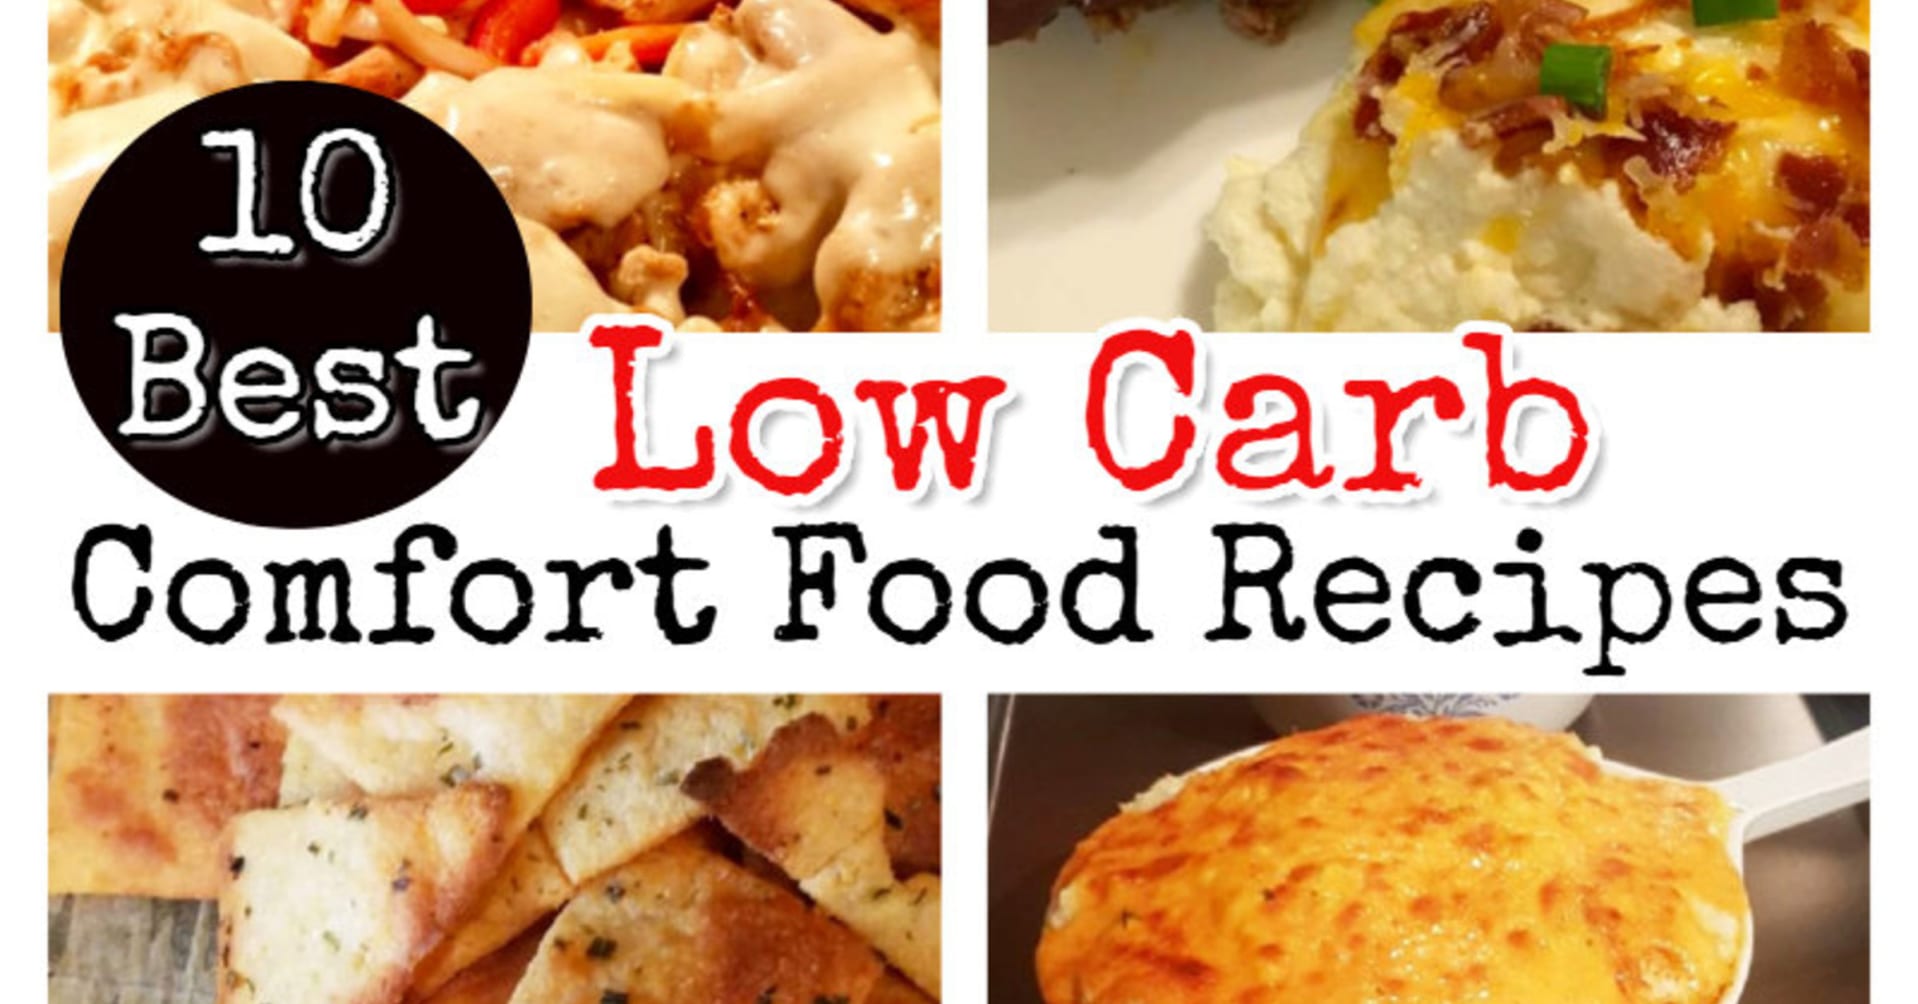 Low carb recipes - easy low carb comfort food recipes